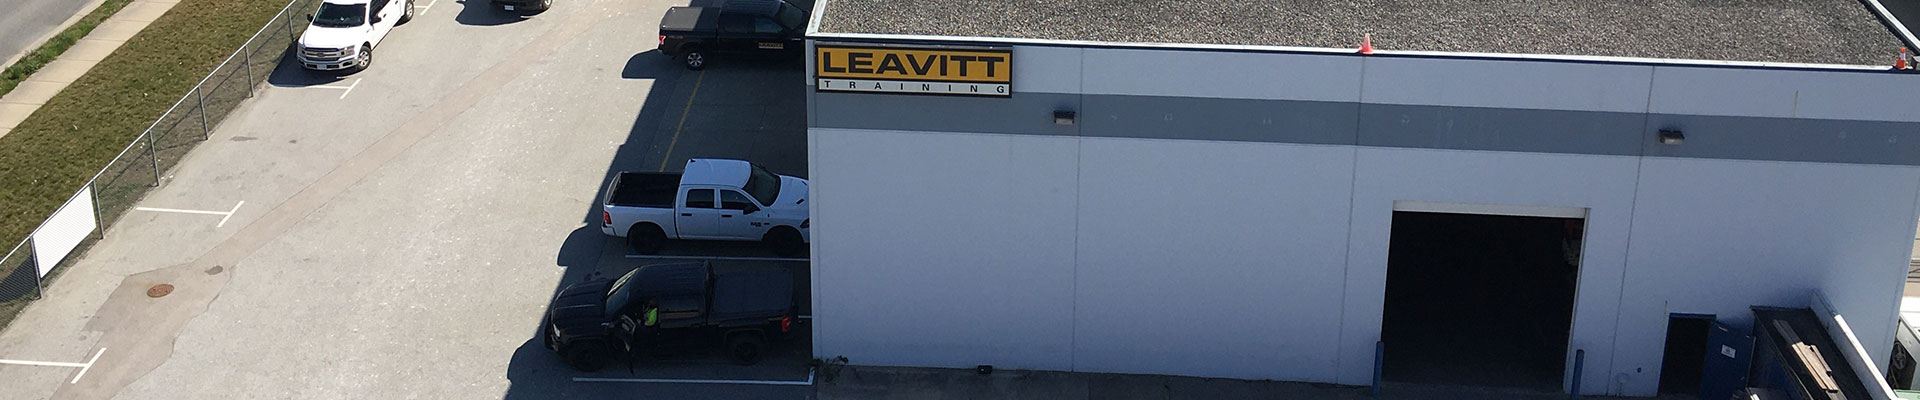 Leavitt Machinery Vancouver Training branch